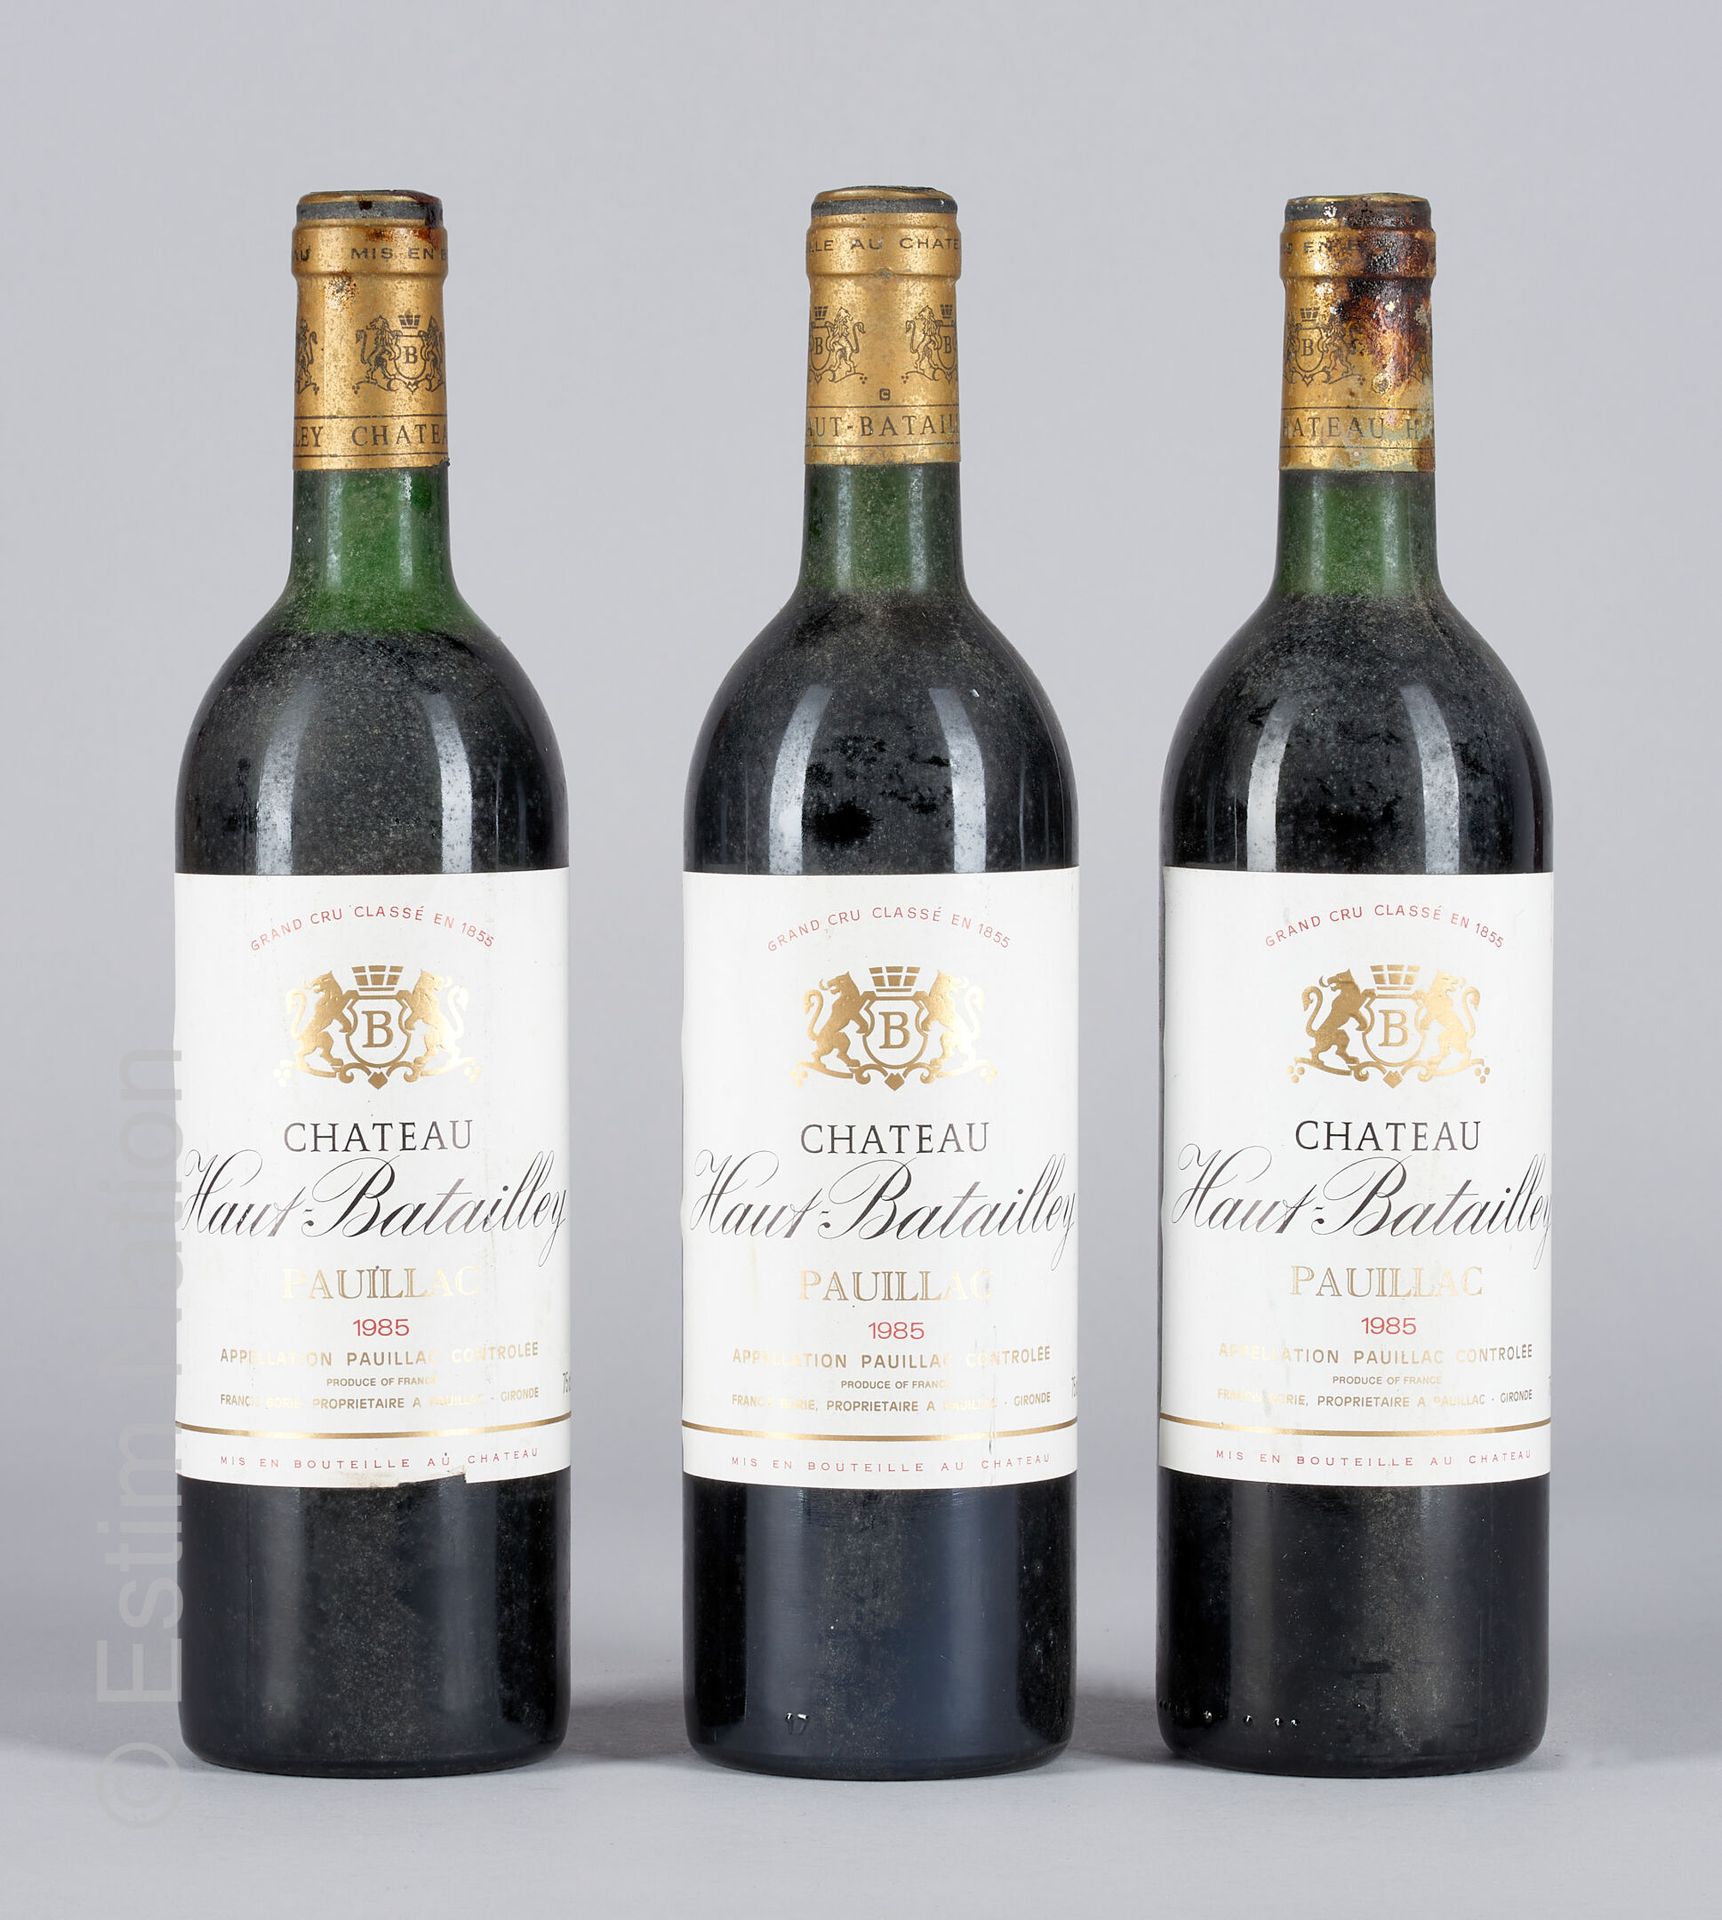 BORDEAUX 3 bottles Château Haut Battailley 1985 Pauillac

(N. 2 tlb, E. Lm)